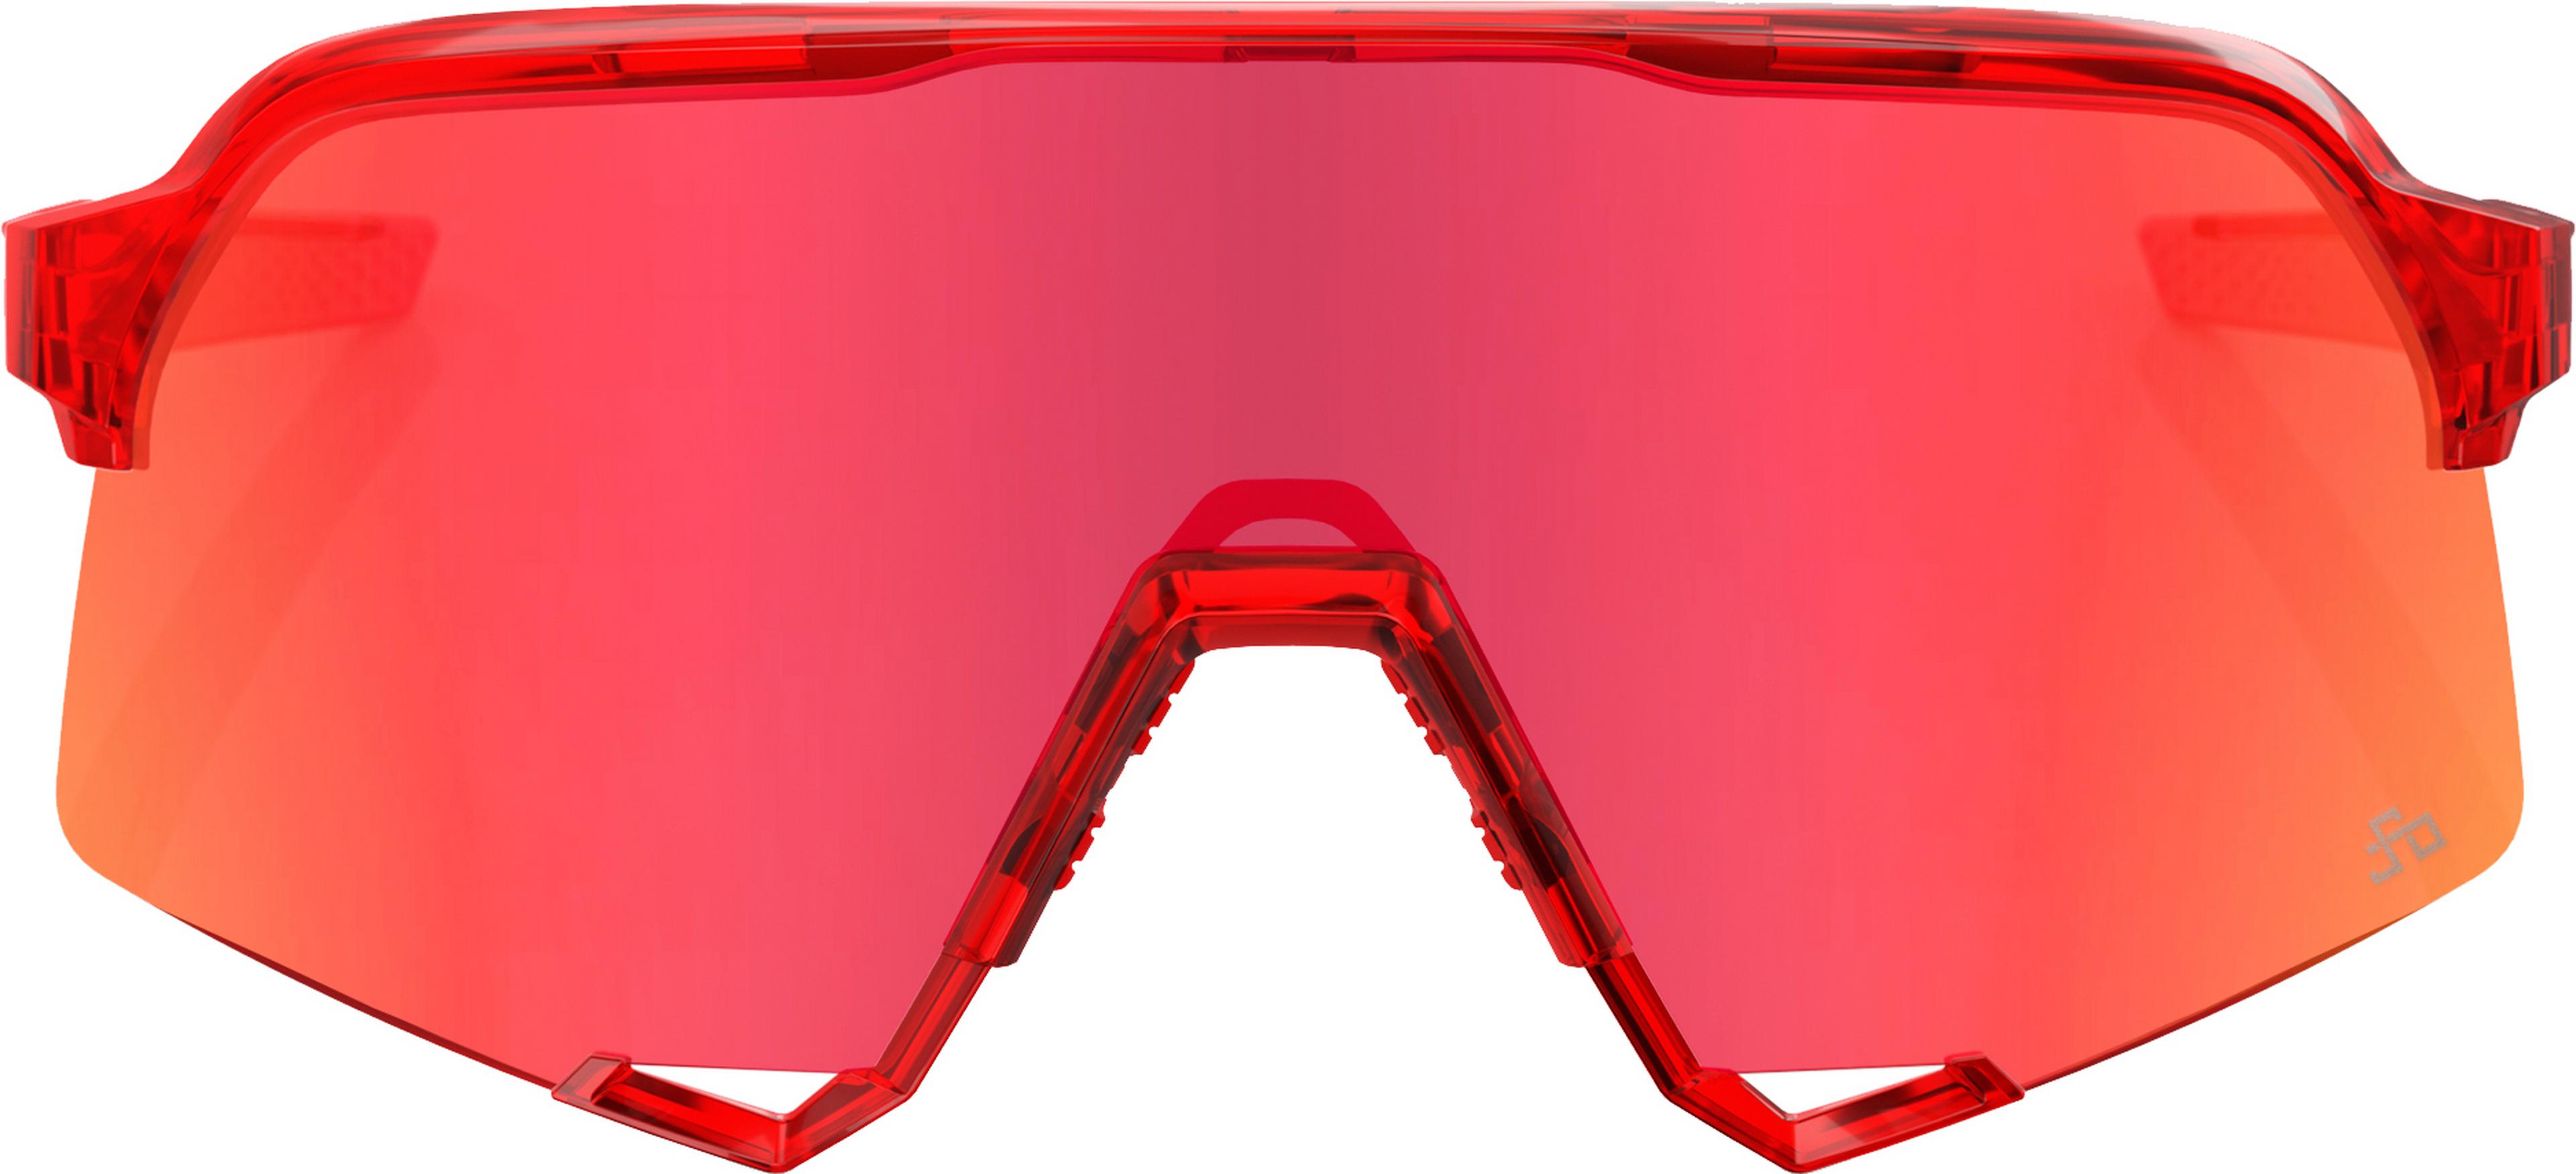 % S3 Peter Sagan LE Gloss Translucent Red サングラス Hiper Red